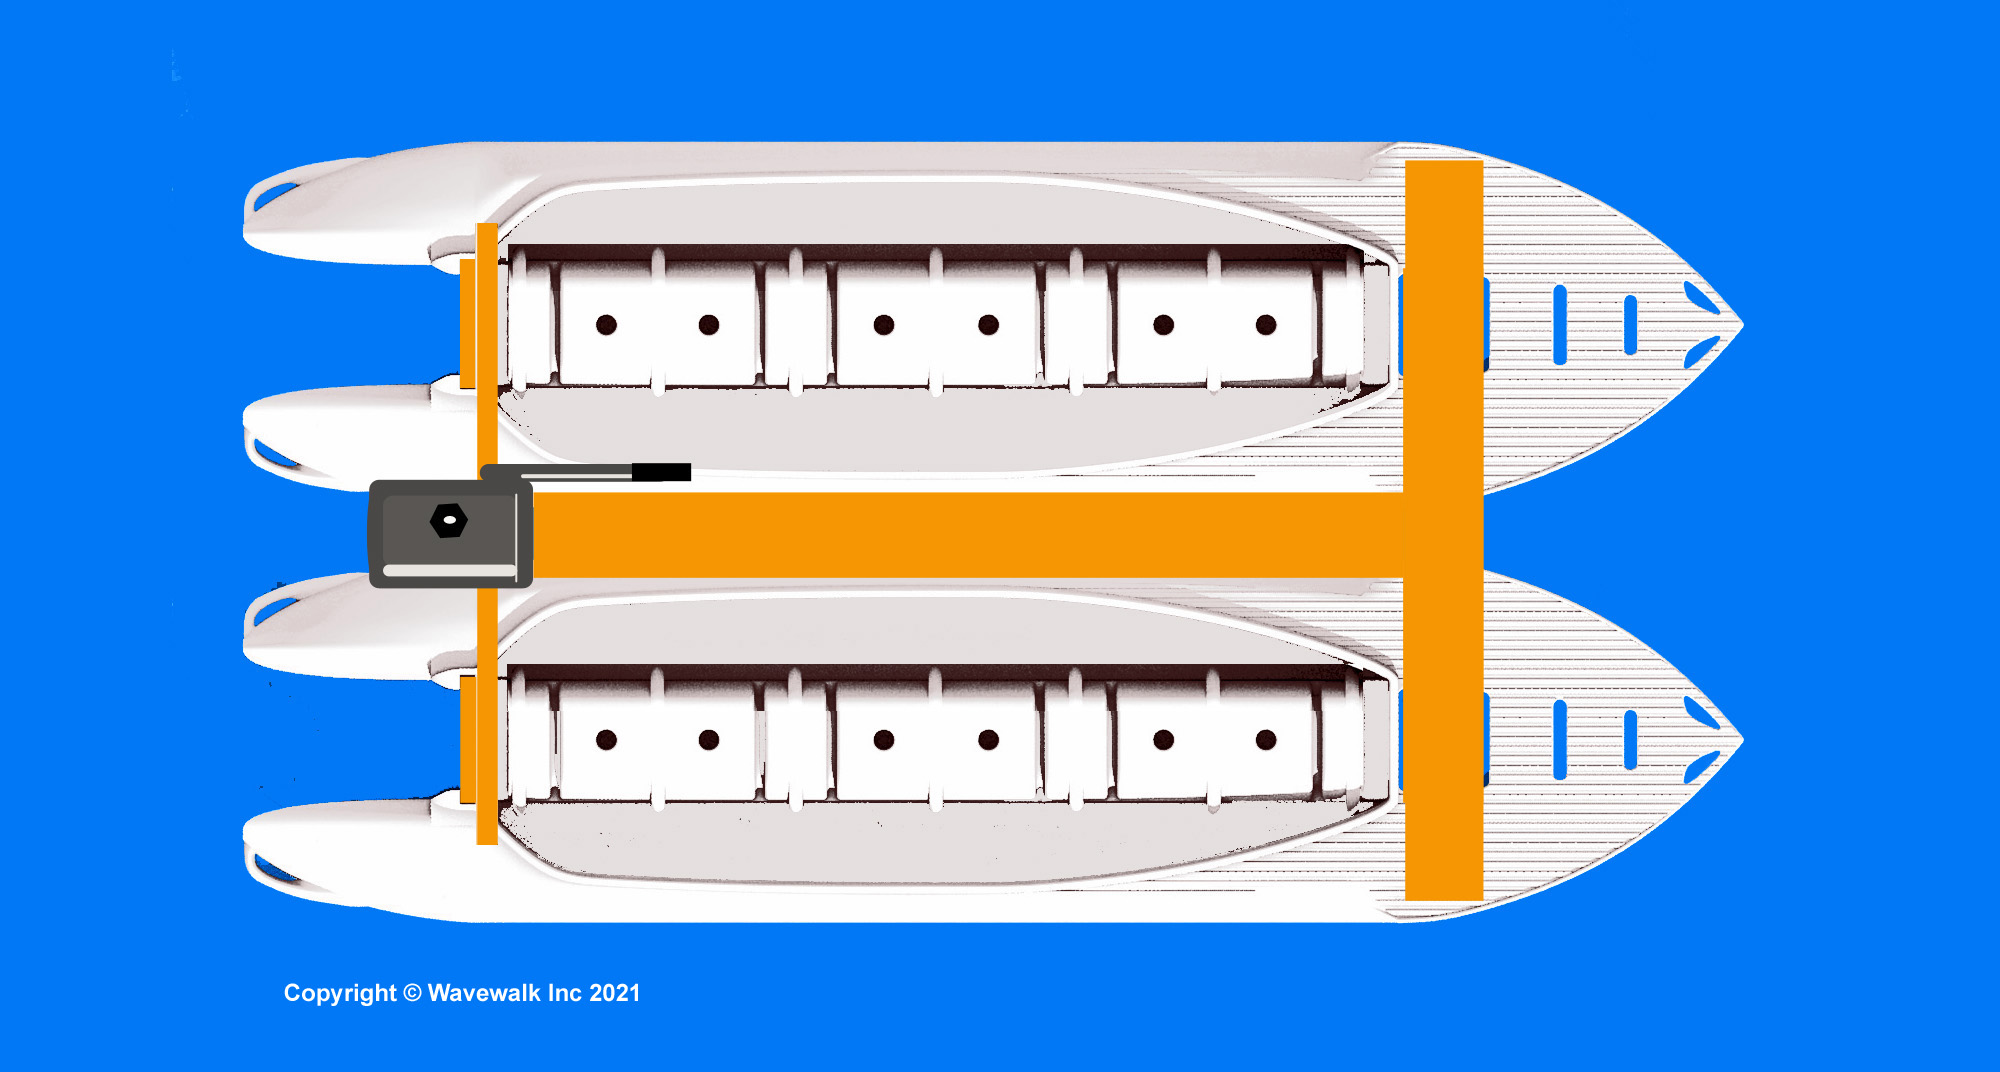 Twin S4 Multihull Boat